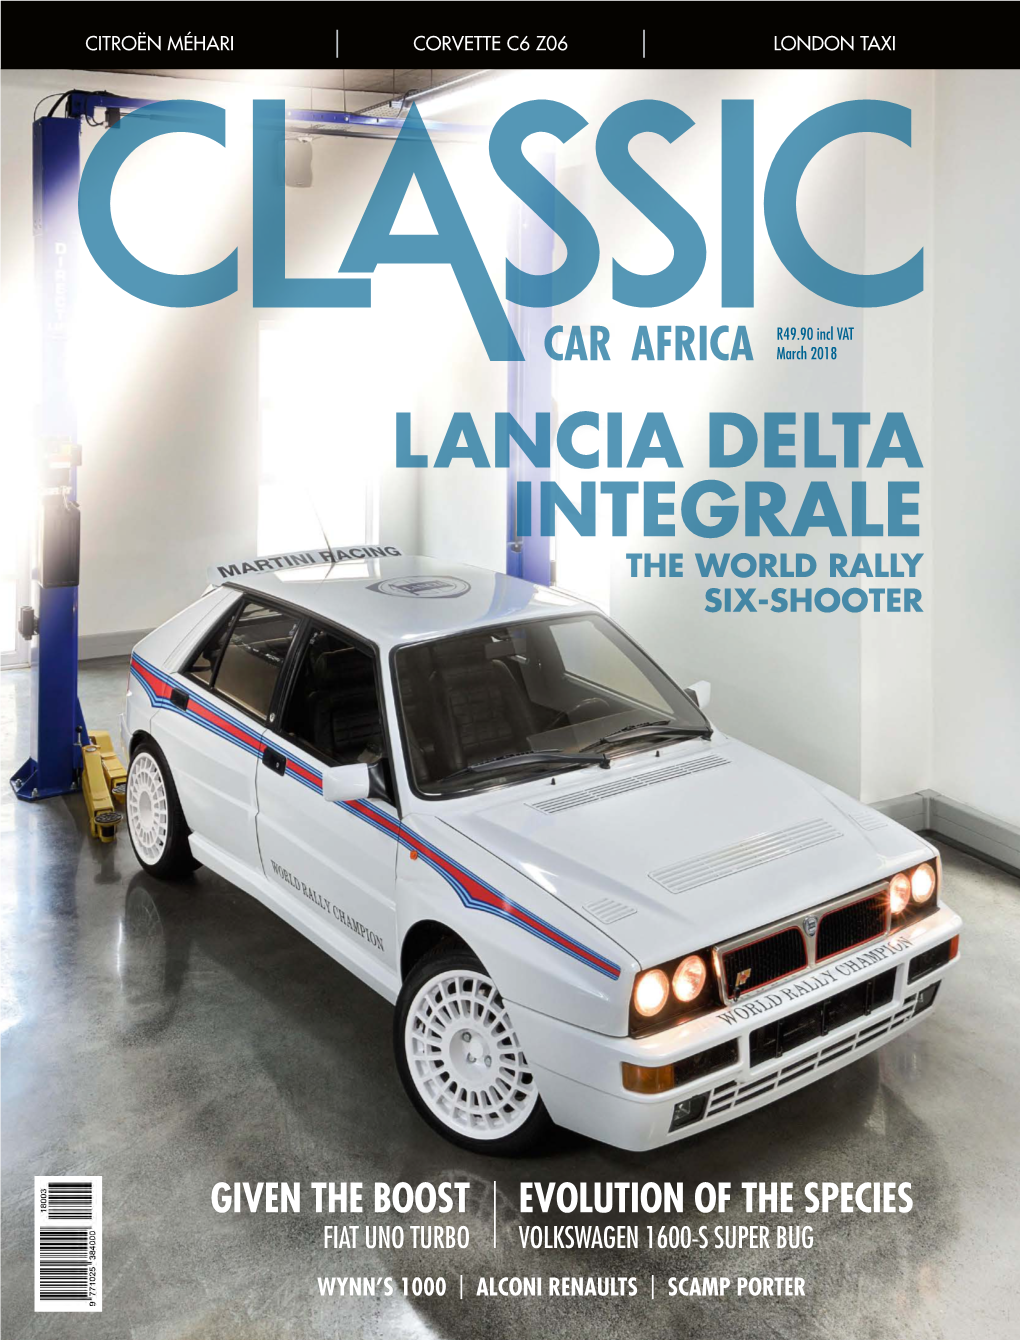 Lancia Delta Integrale the World Rally Six-Shooter